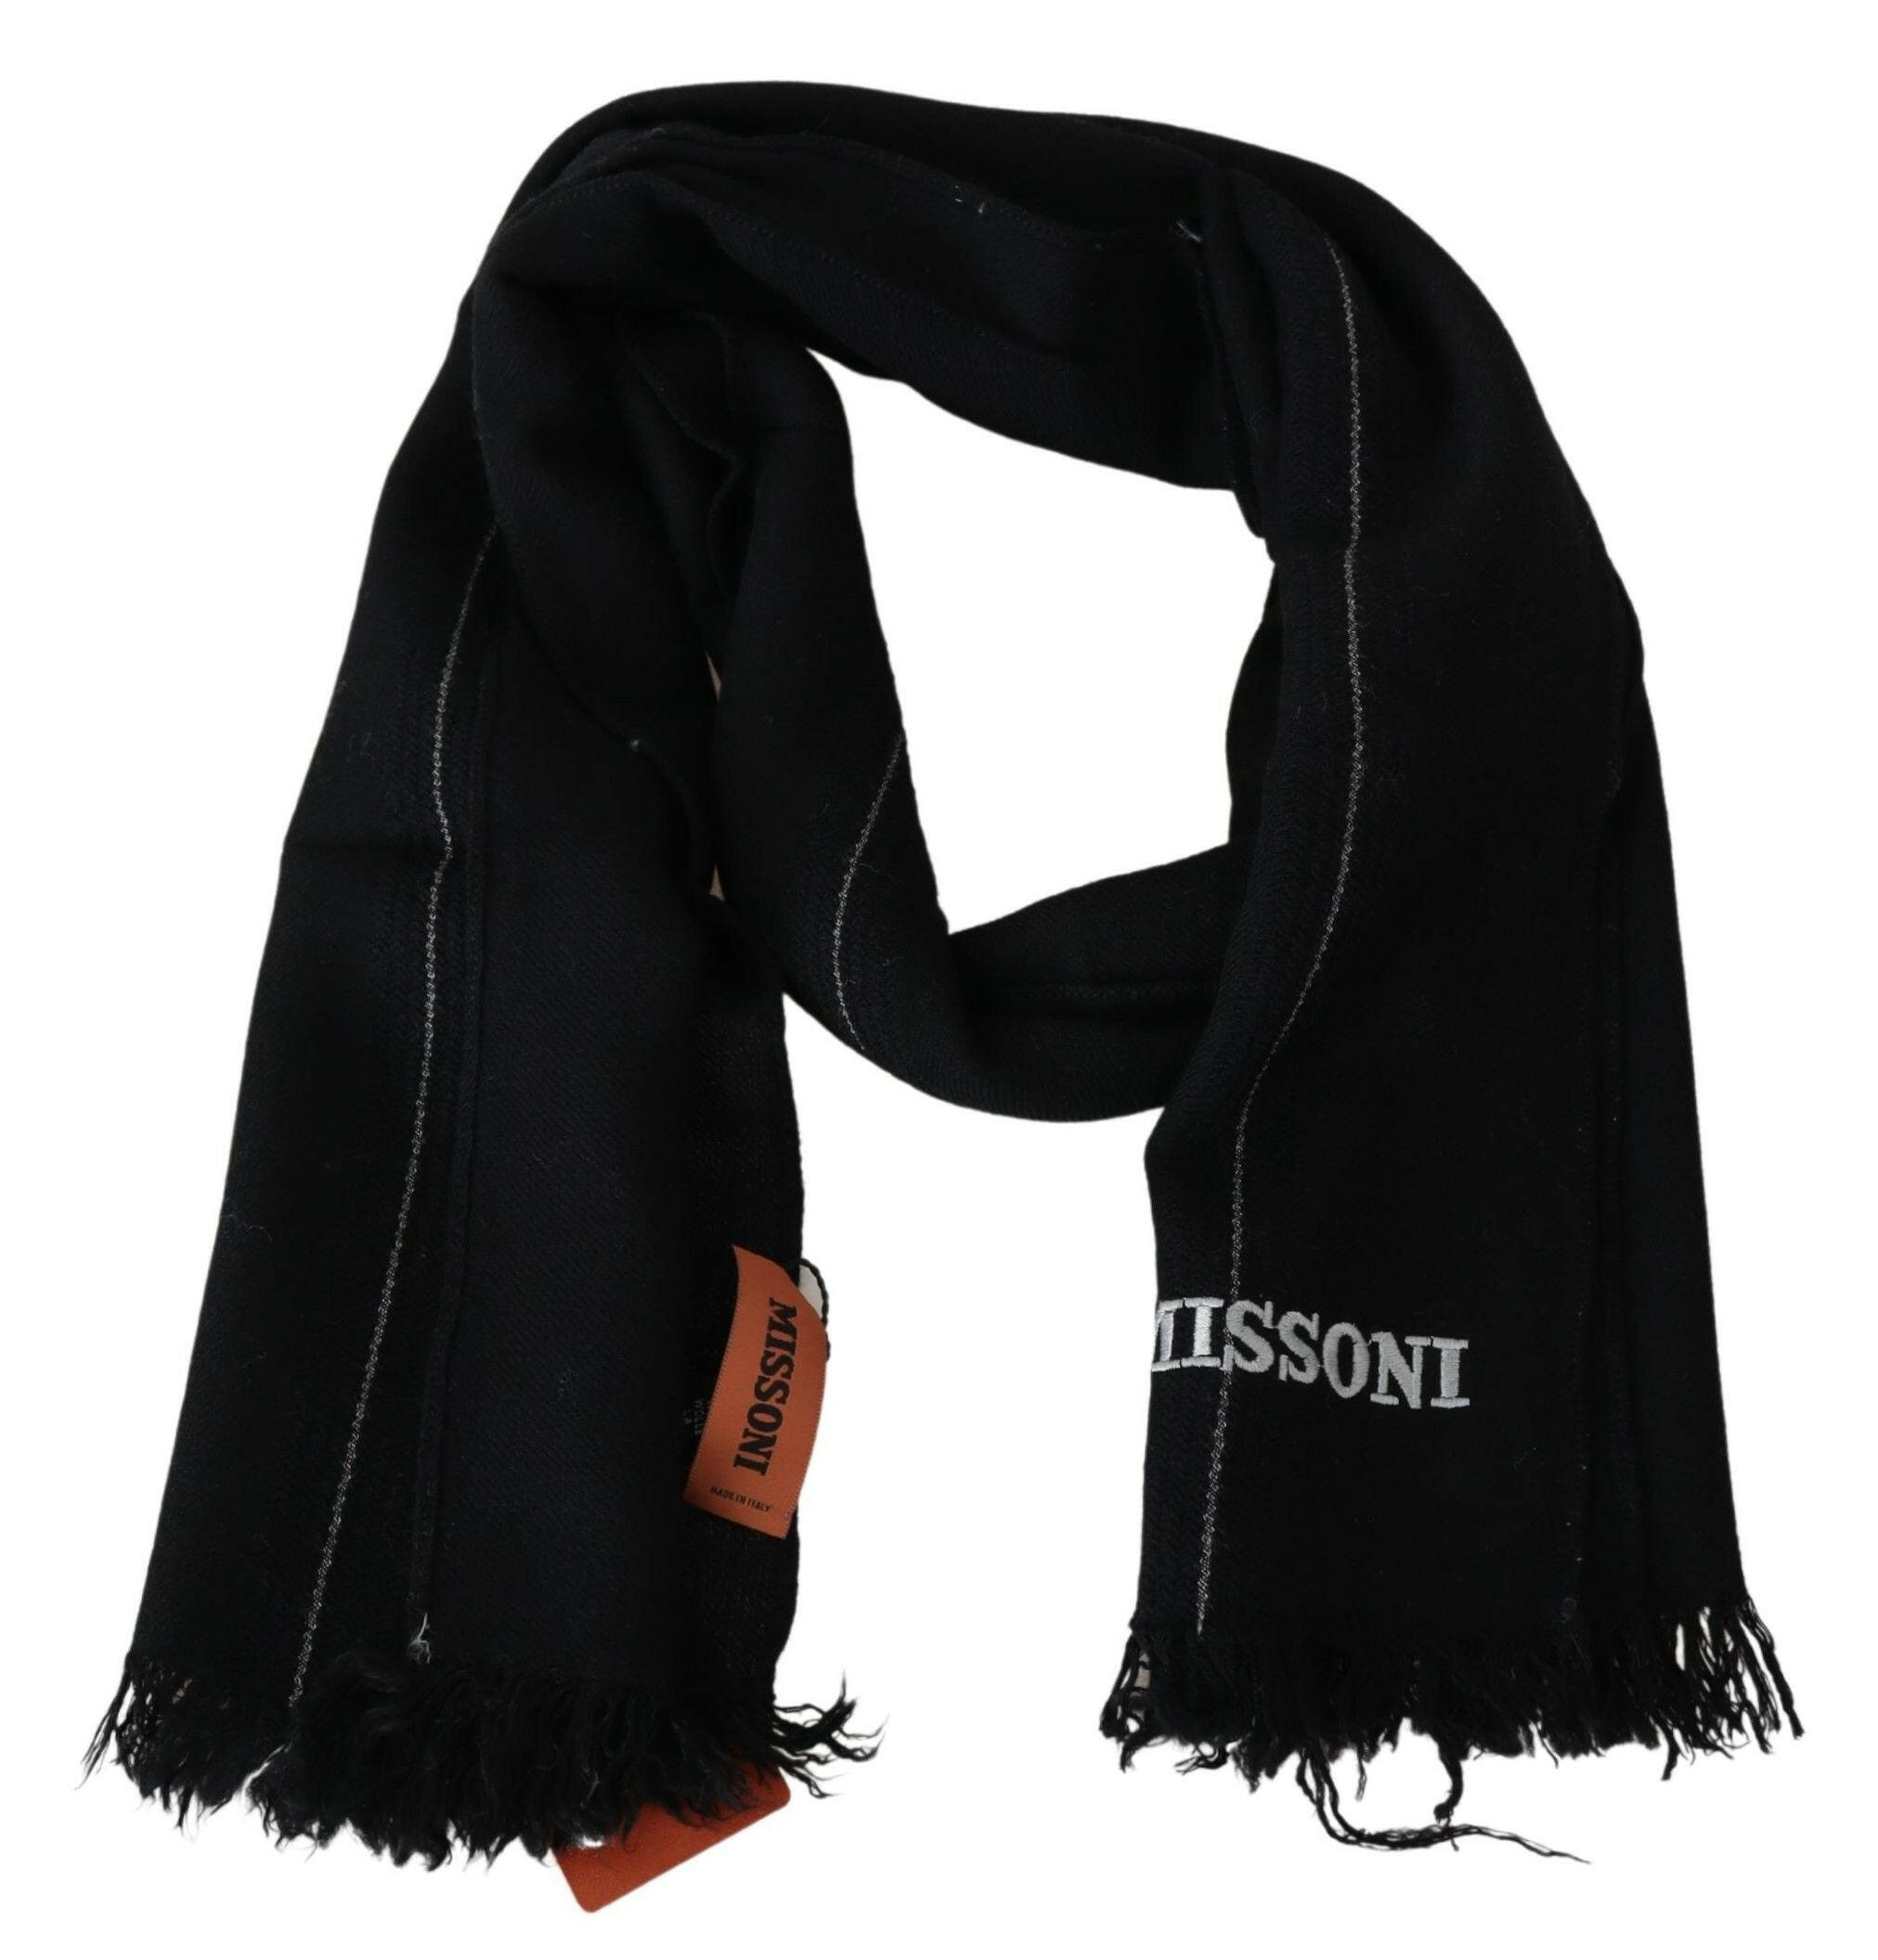 Missoni Black 100% Wool Unisex Neck Wrap Shawl Fringes Scarf - GENUINE AUTHENTIC BRAND LLC  